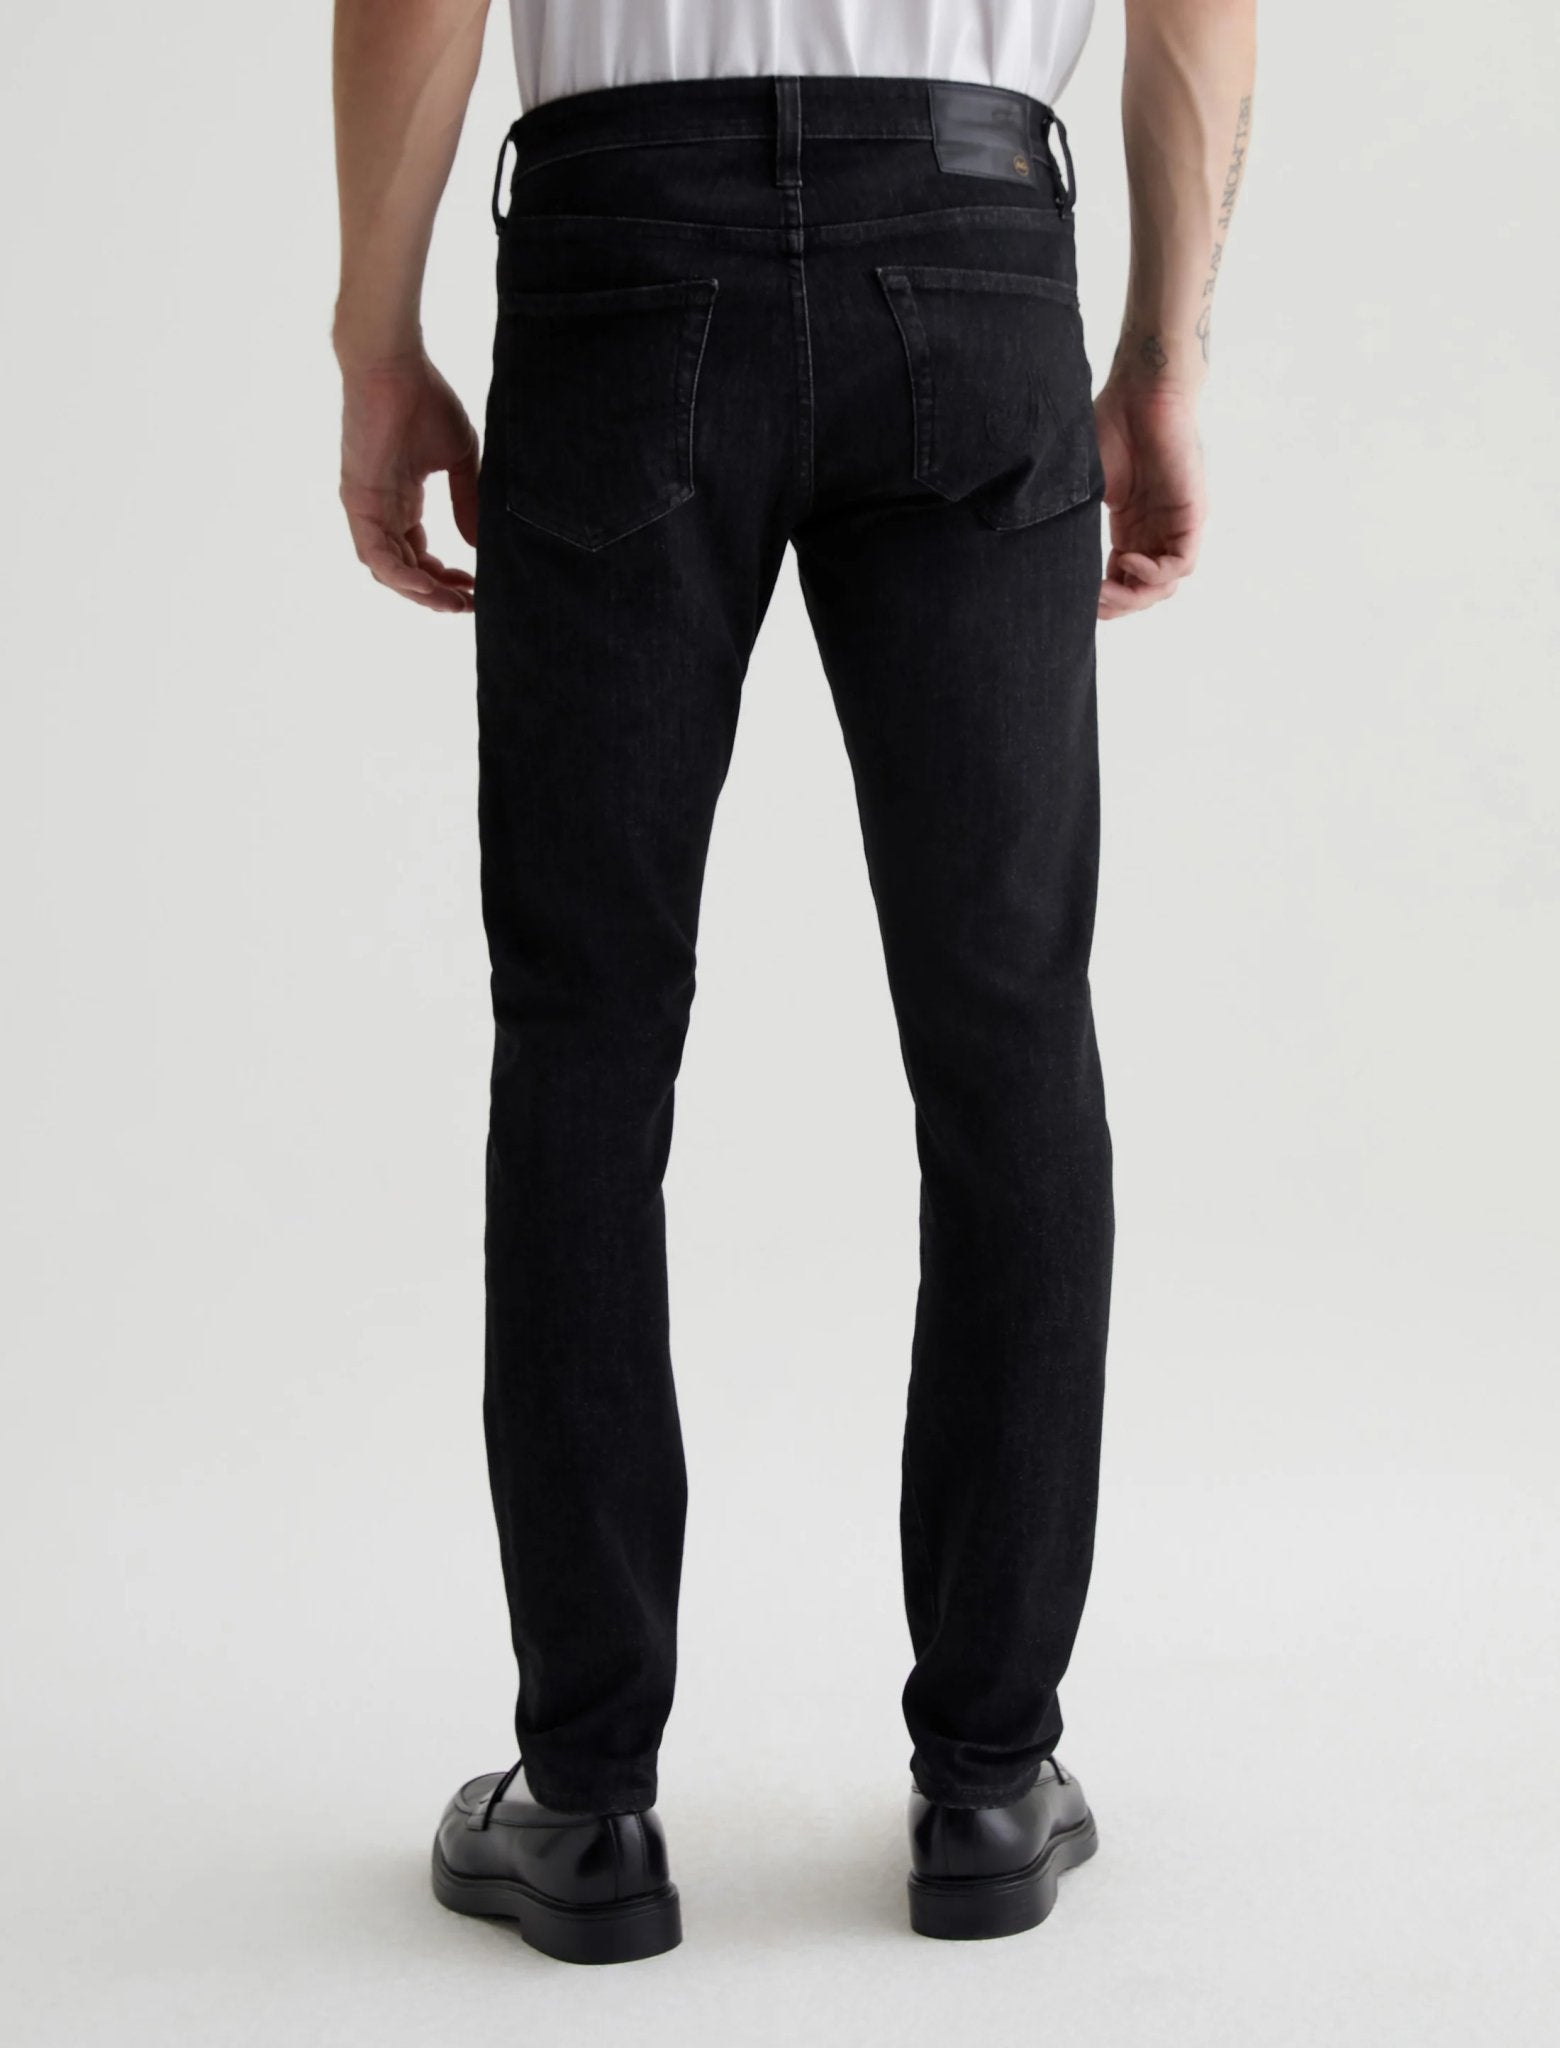 Dylan Slim Skinny Jean - AG Jeans - Danali - 1139IBK-BMAR-30